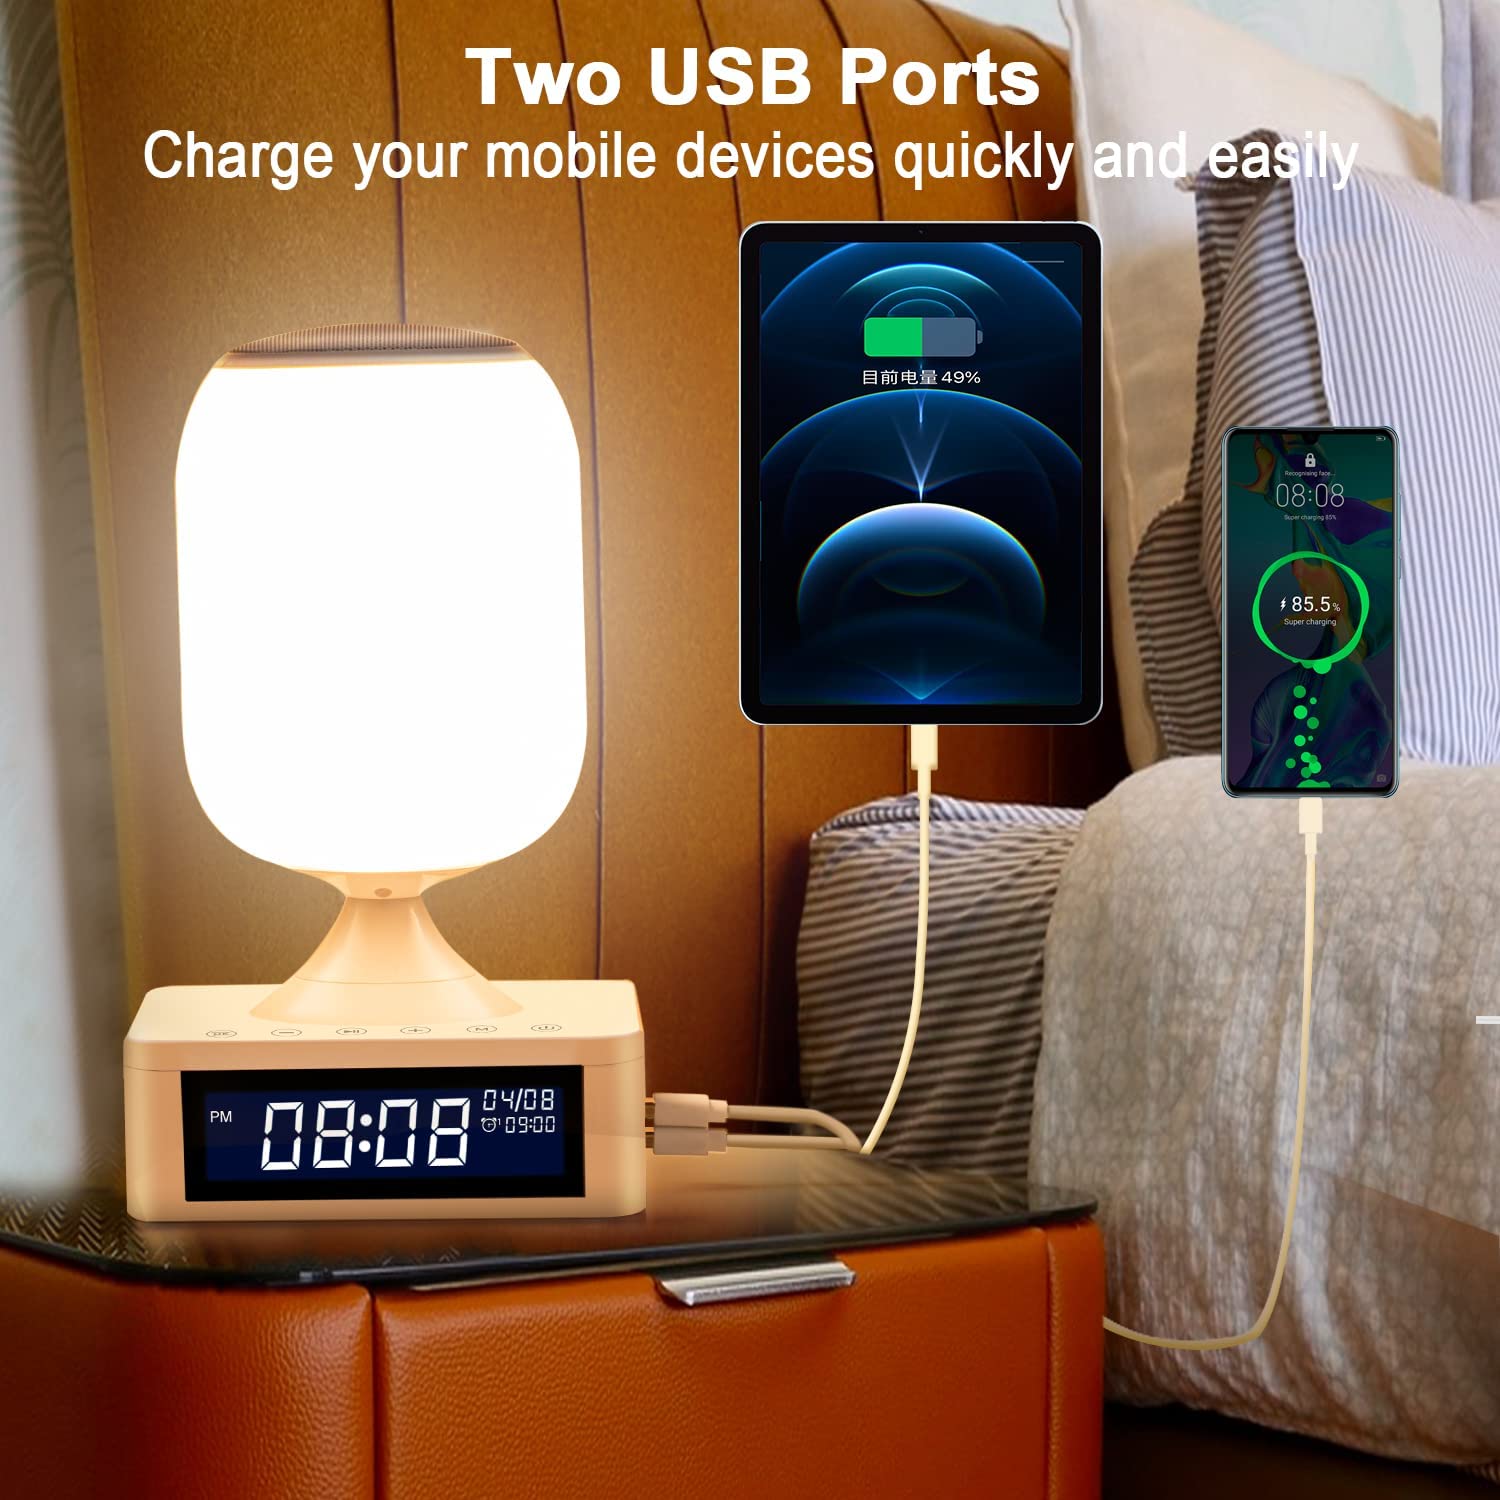 چراغ خواب موزیکال LED Table LampMusic Bedside Lamp with 2 USB Ports - ارسال ۱۰ الی ۱۵ روز کاری